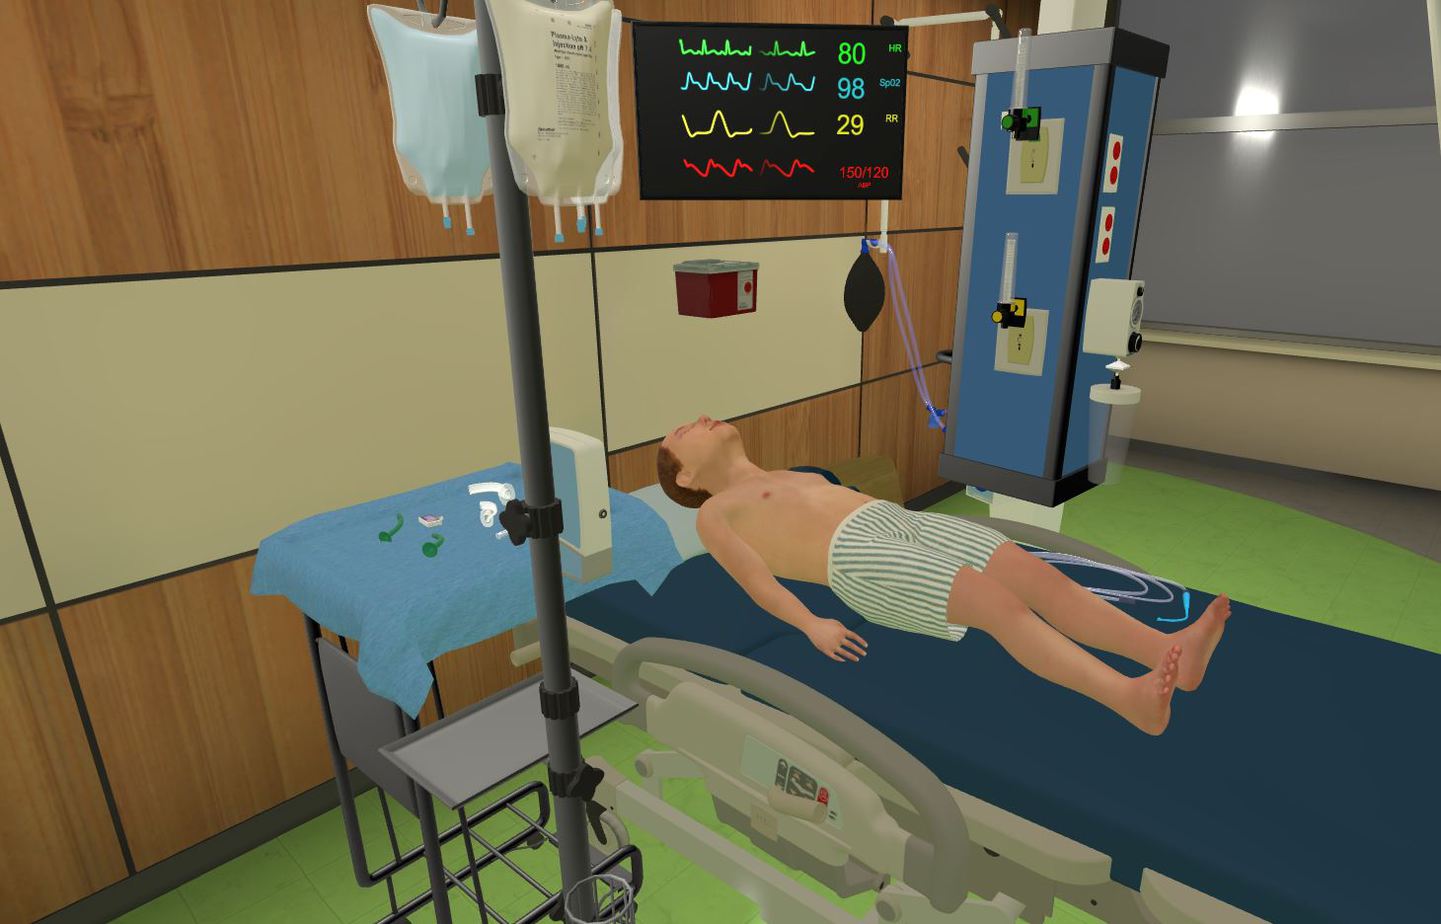 pediatric VR mannequin for medical simulation